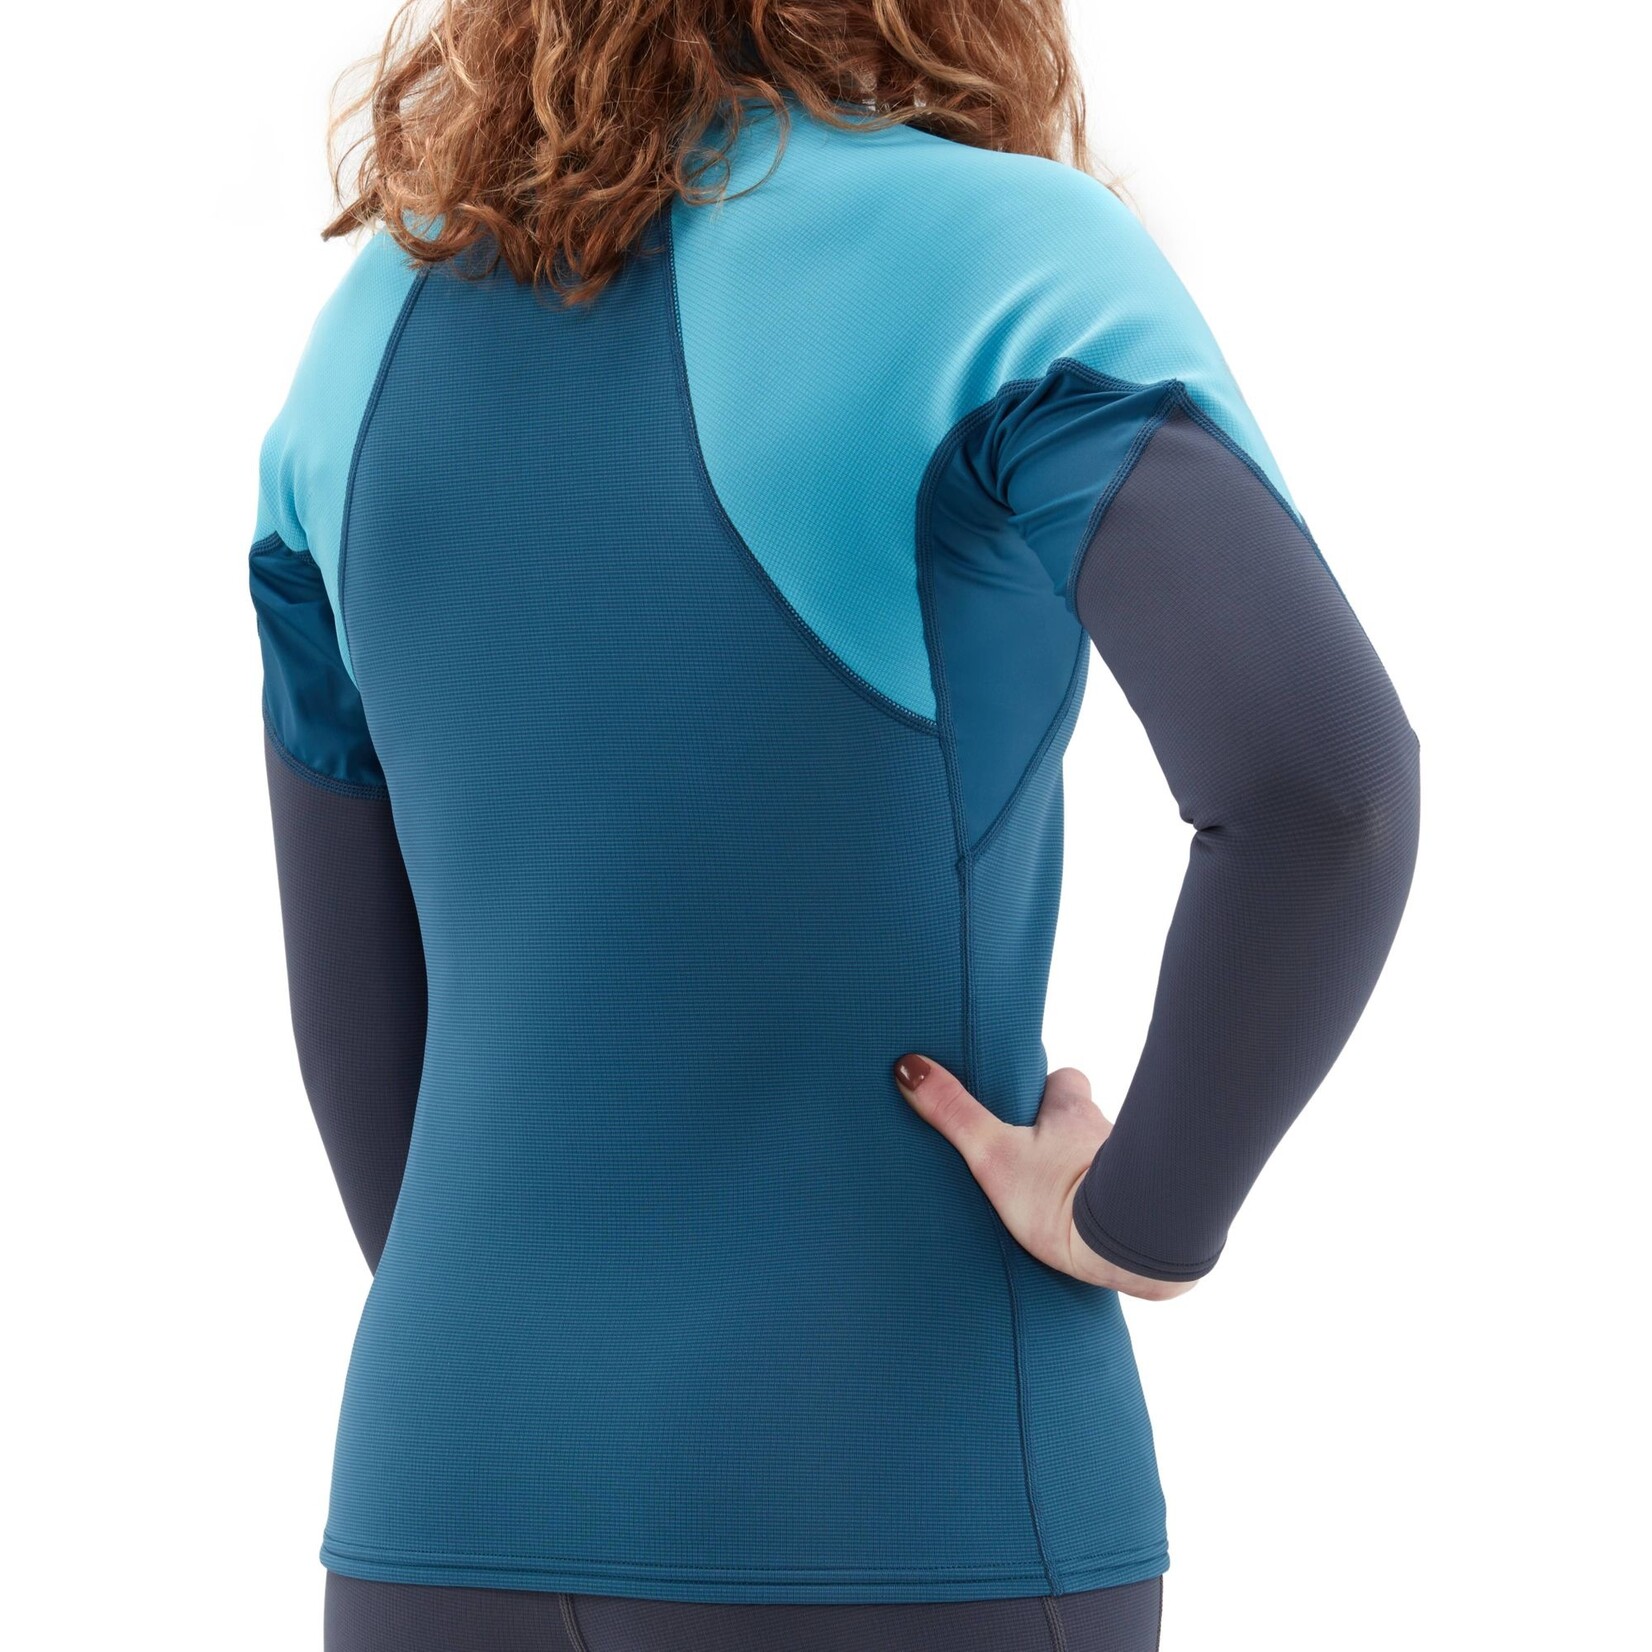 NRS - Women's HydroSkin 0.5 Long-Sleeve Shirt